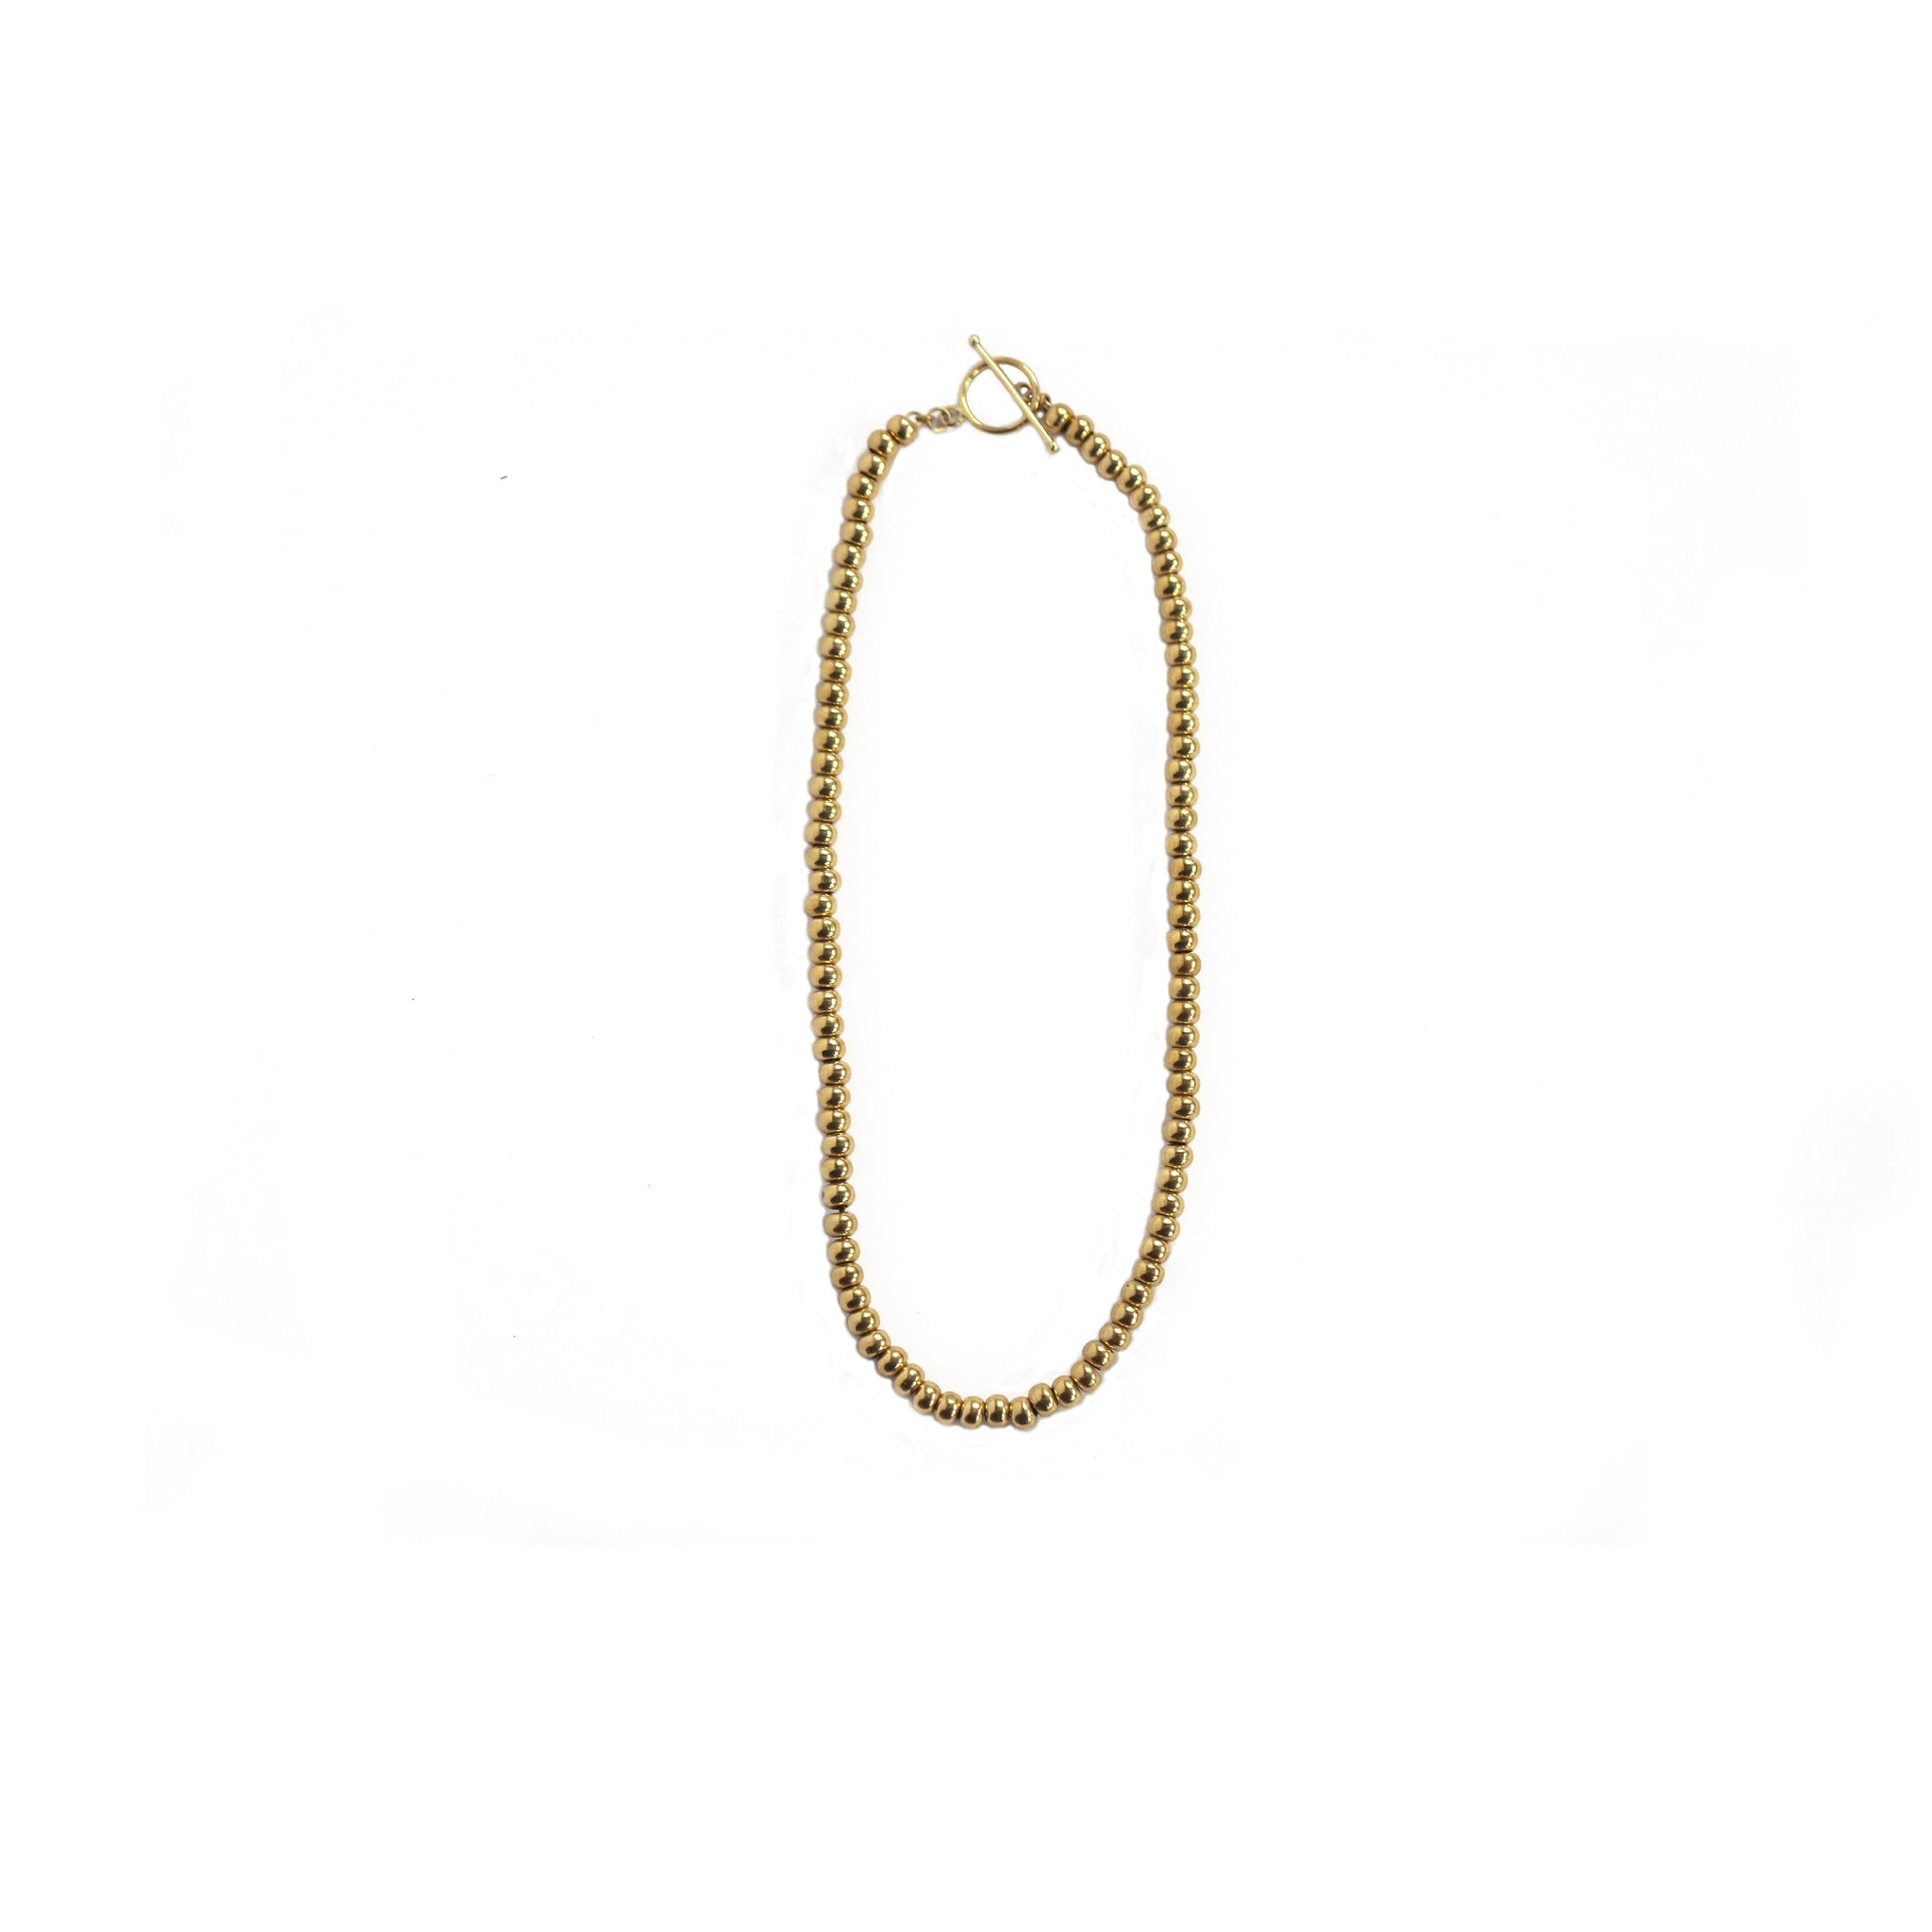 Brass Beaded Necklace